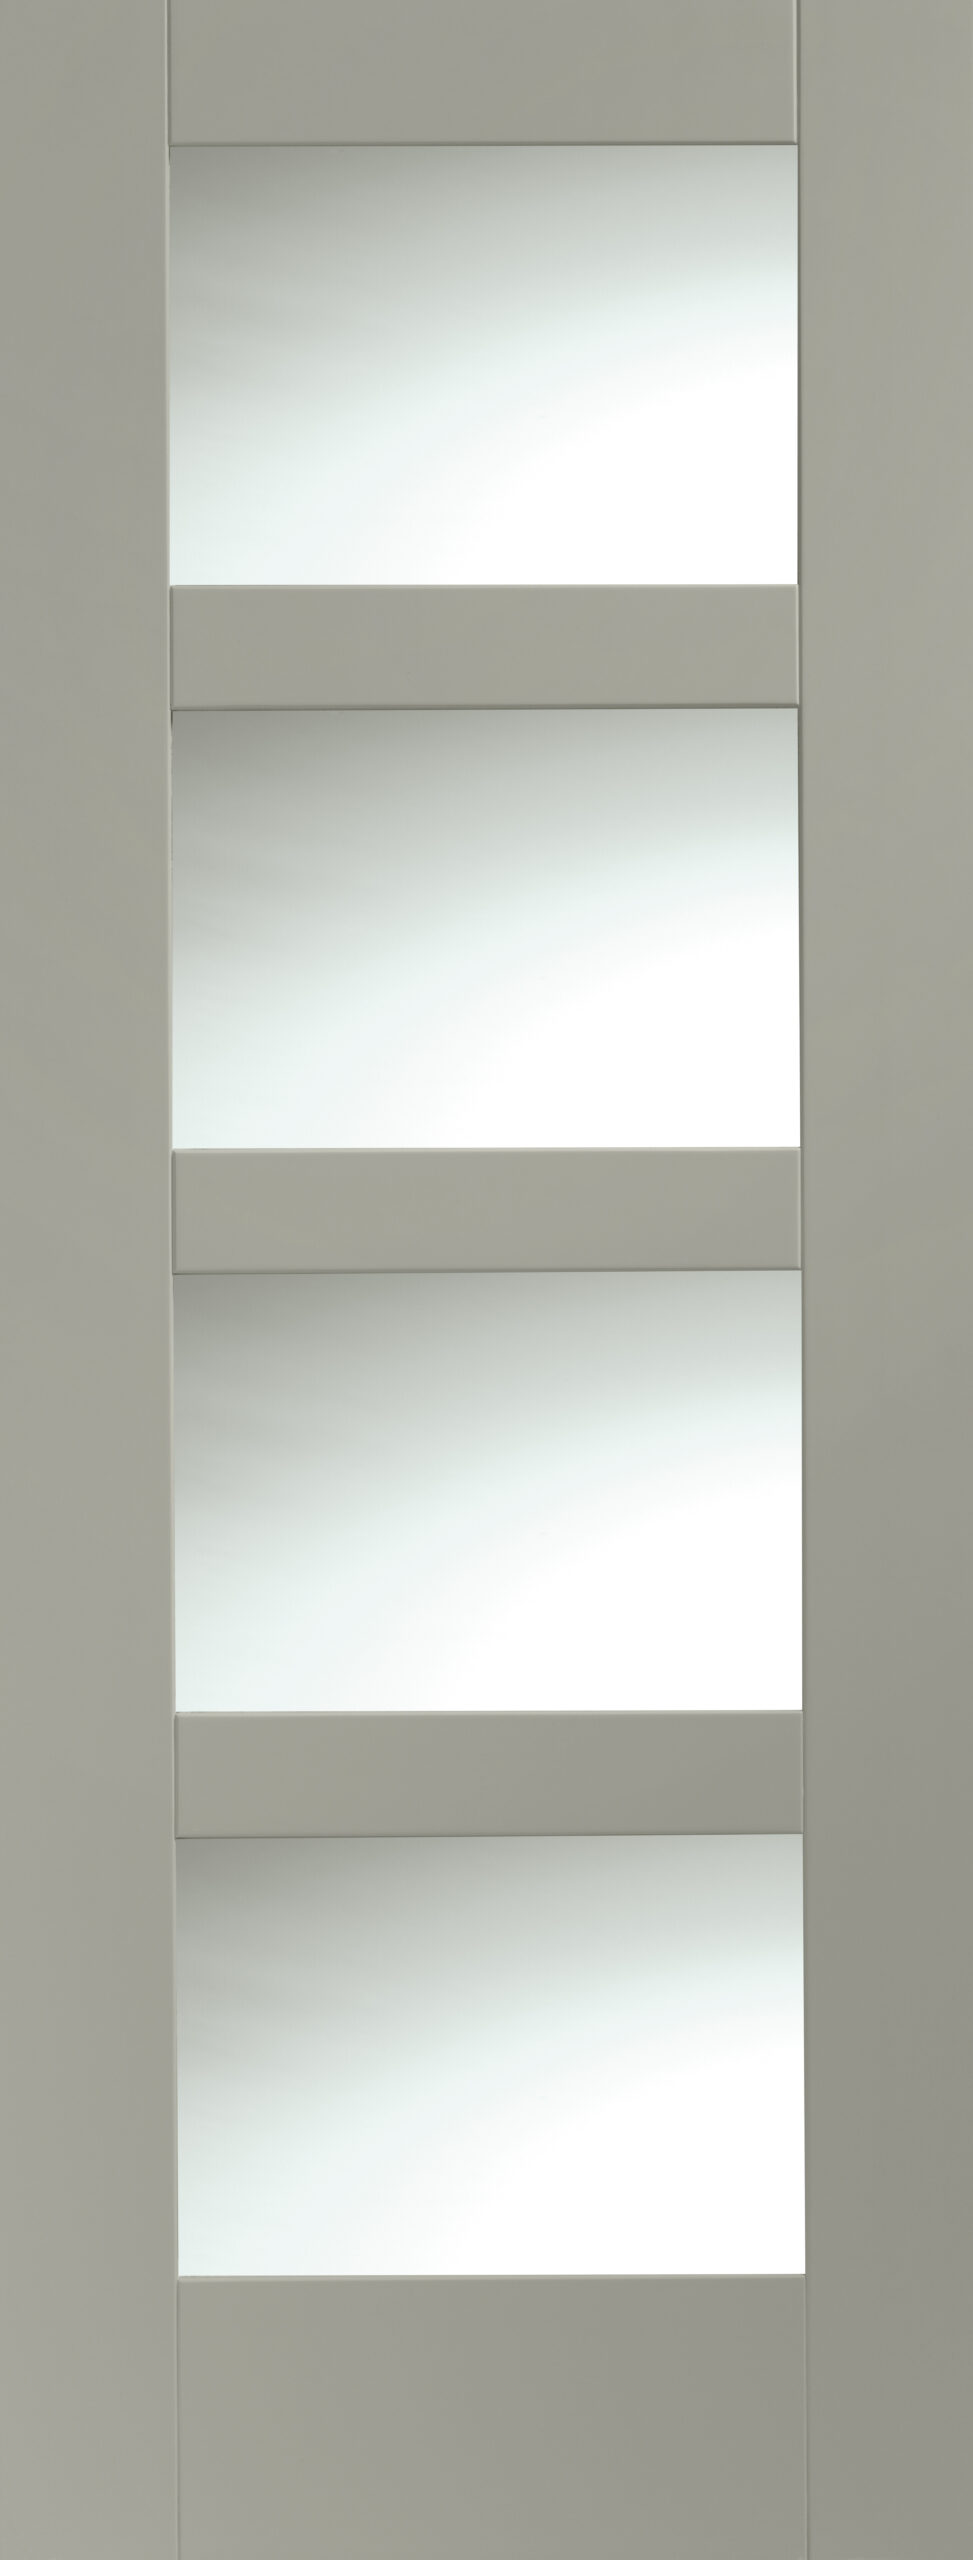 Shaker 4 Light Internal White Primed Fire Door with Clear Glass – 1981 x 686 x 44 mm, Slate